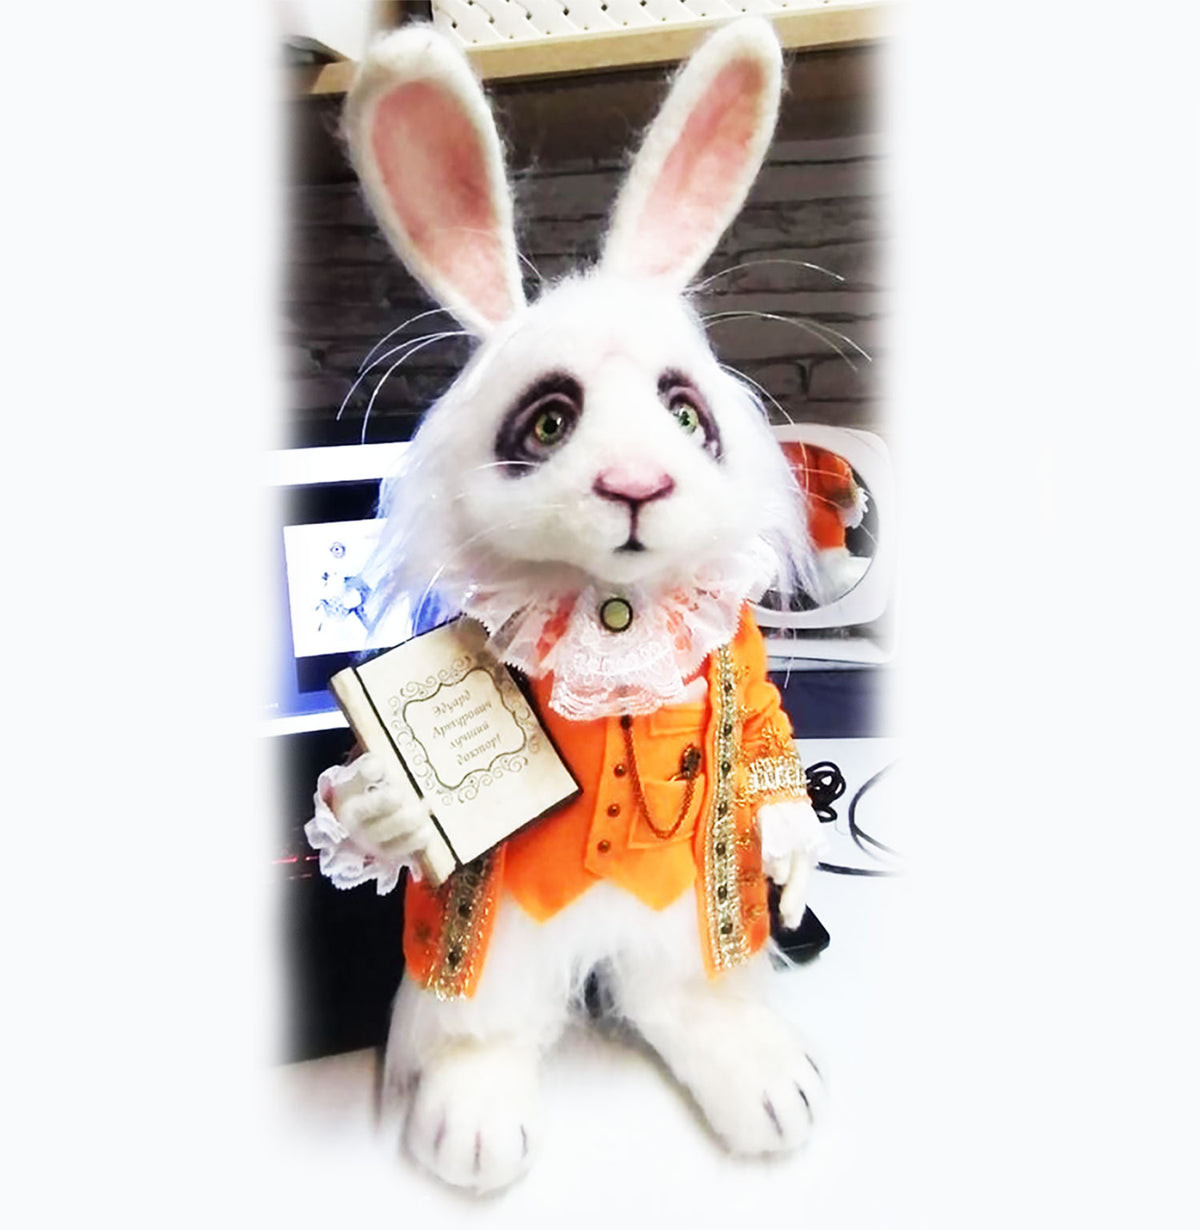 Felt Animal Statue - The White Rabbit